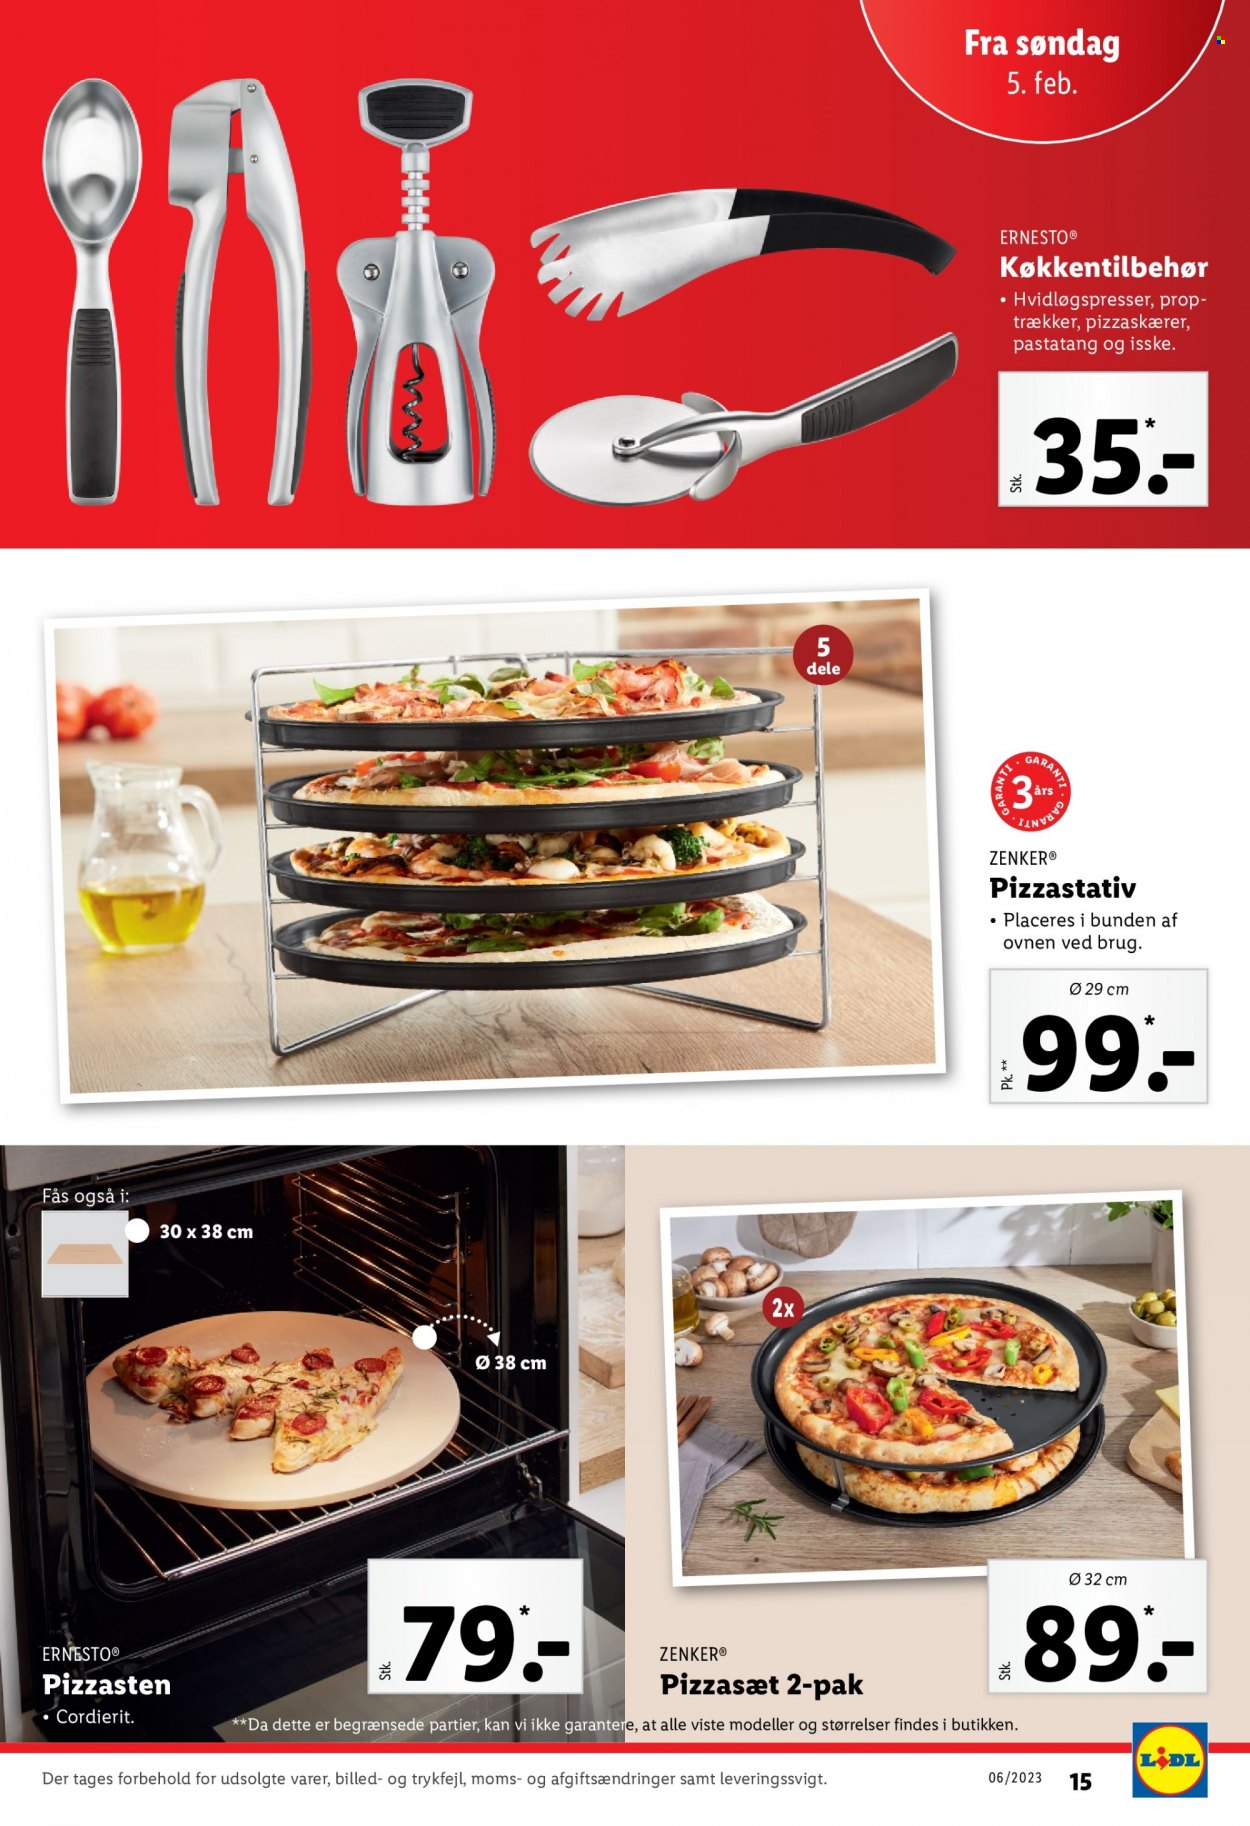 thumbnail - Lidl tilbud  - 5.2.2023 - 11.2.2023 - tilbudsprodukter - køkkentilbehør, pizzasten. Side 15.